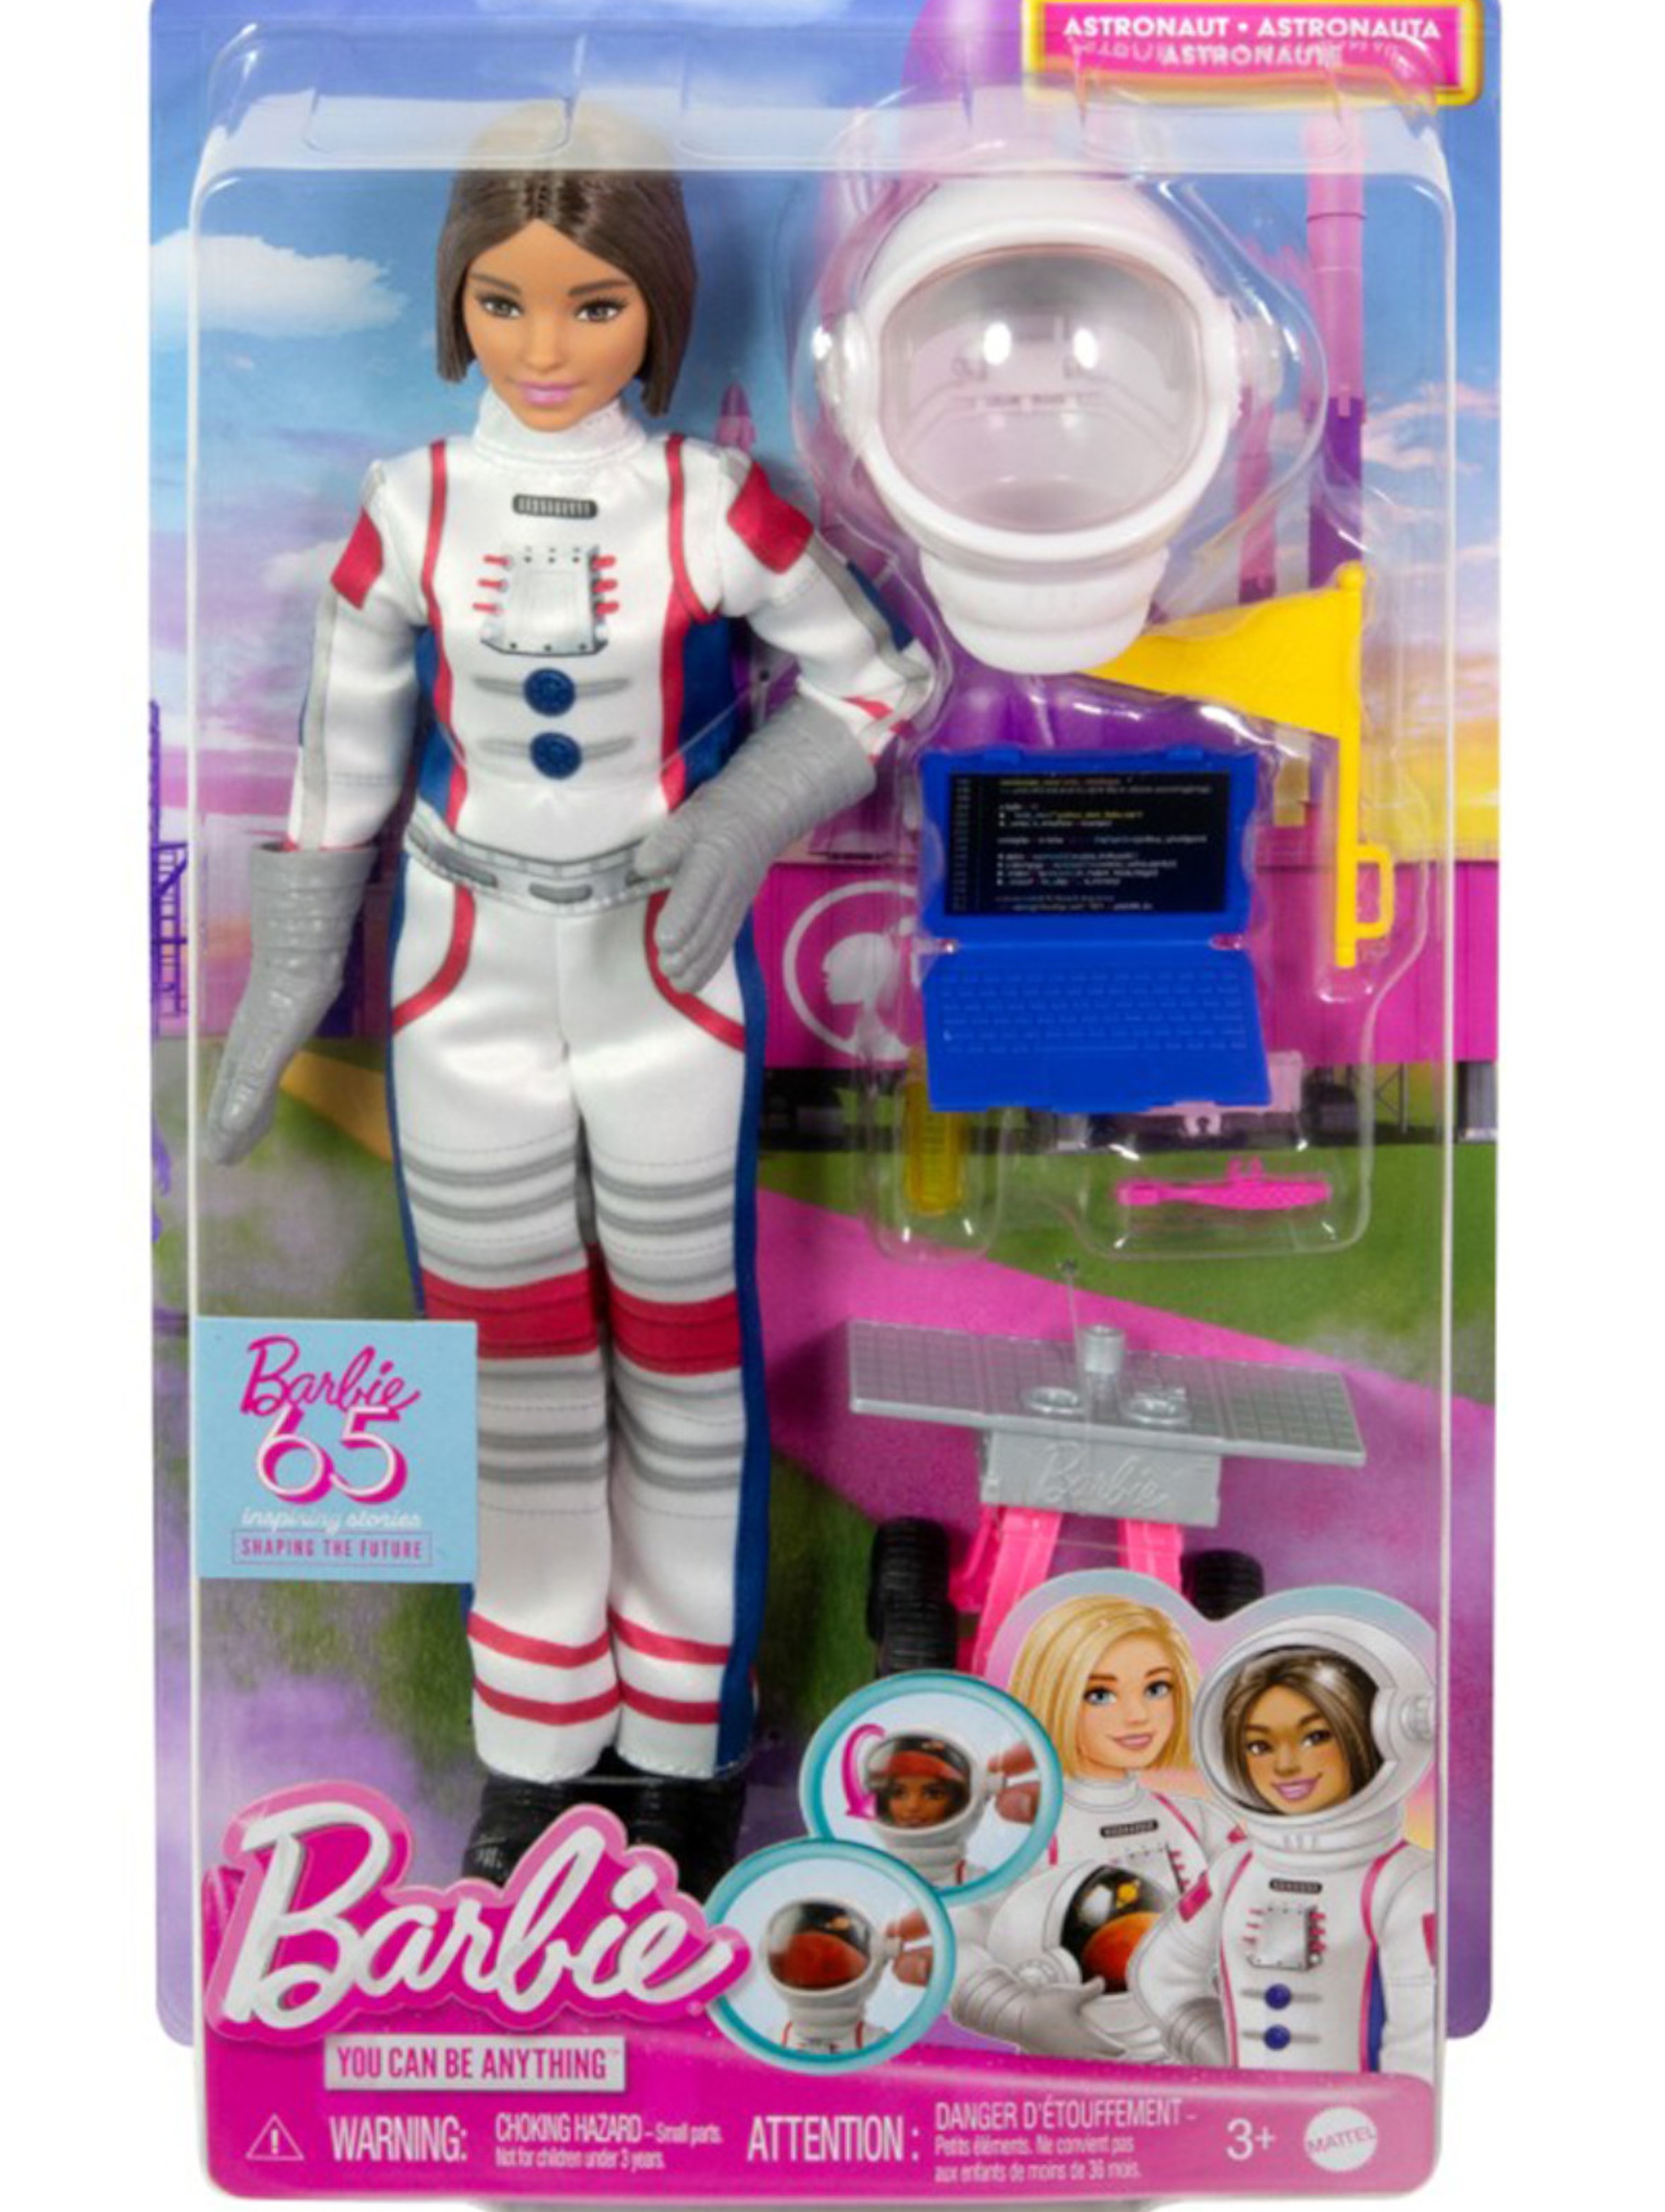 Lalka Barbie Kariera, Astronautka